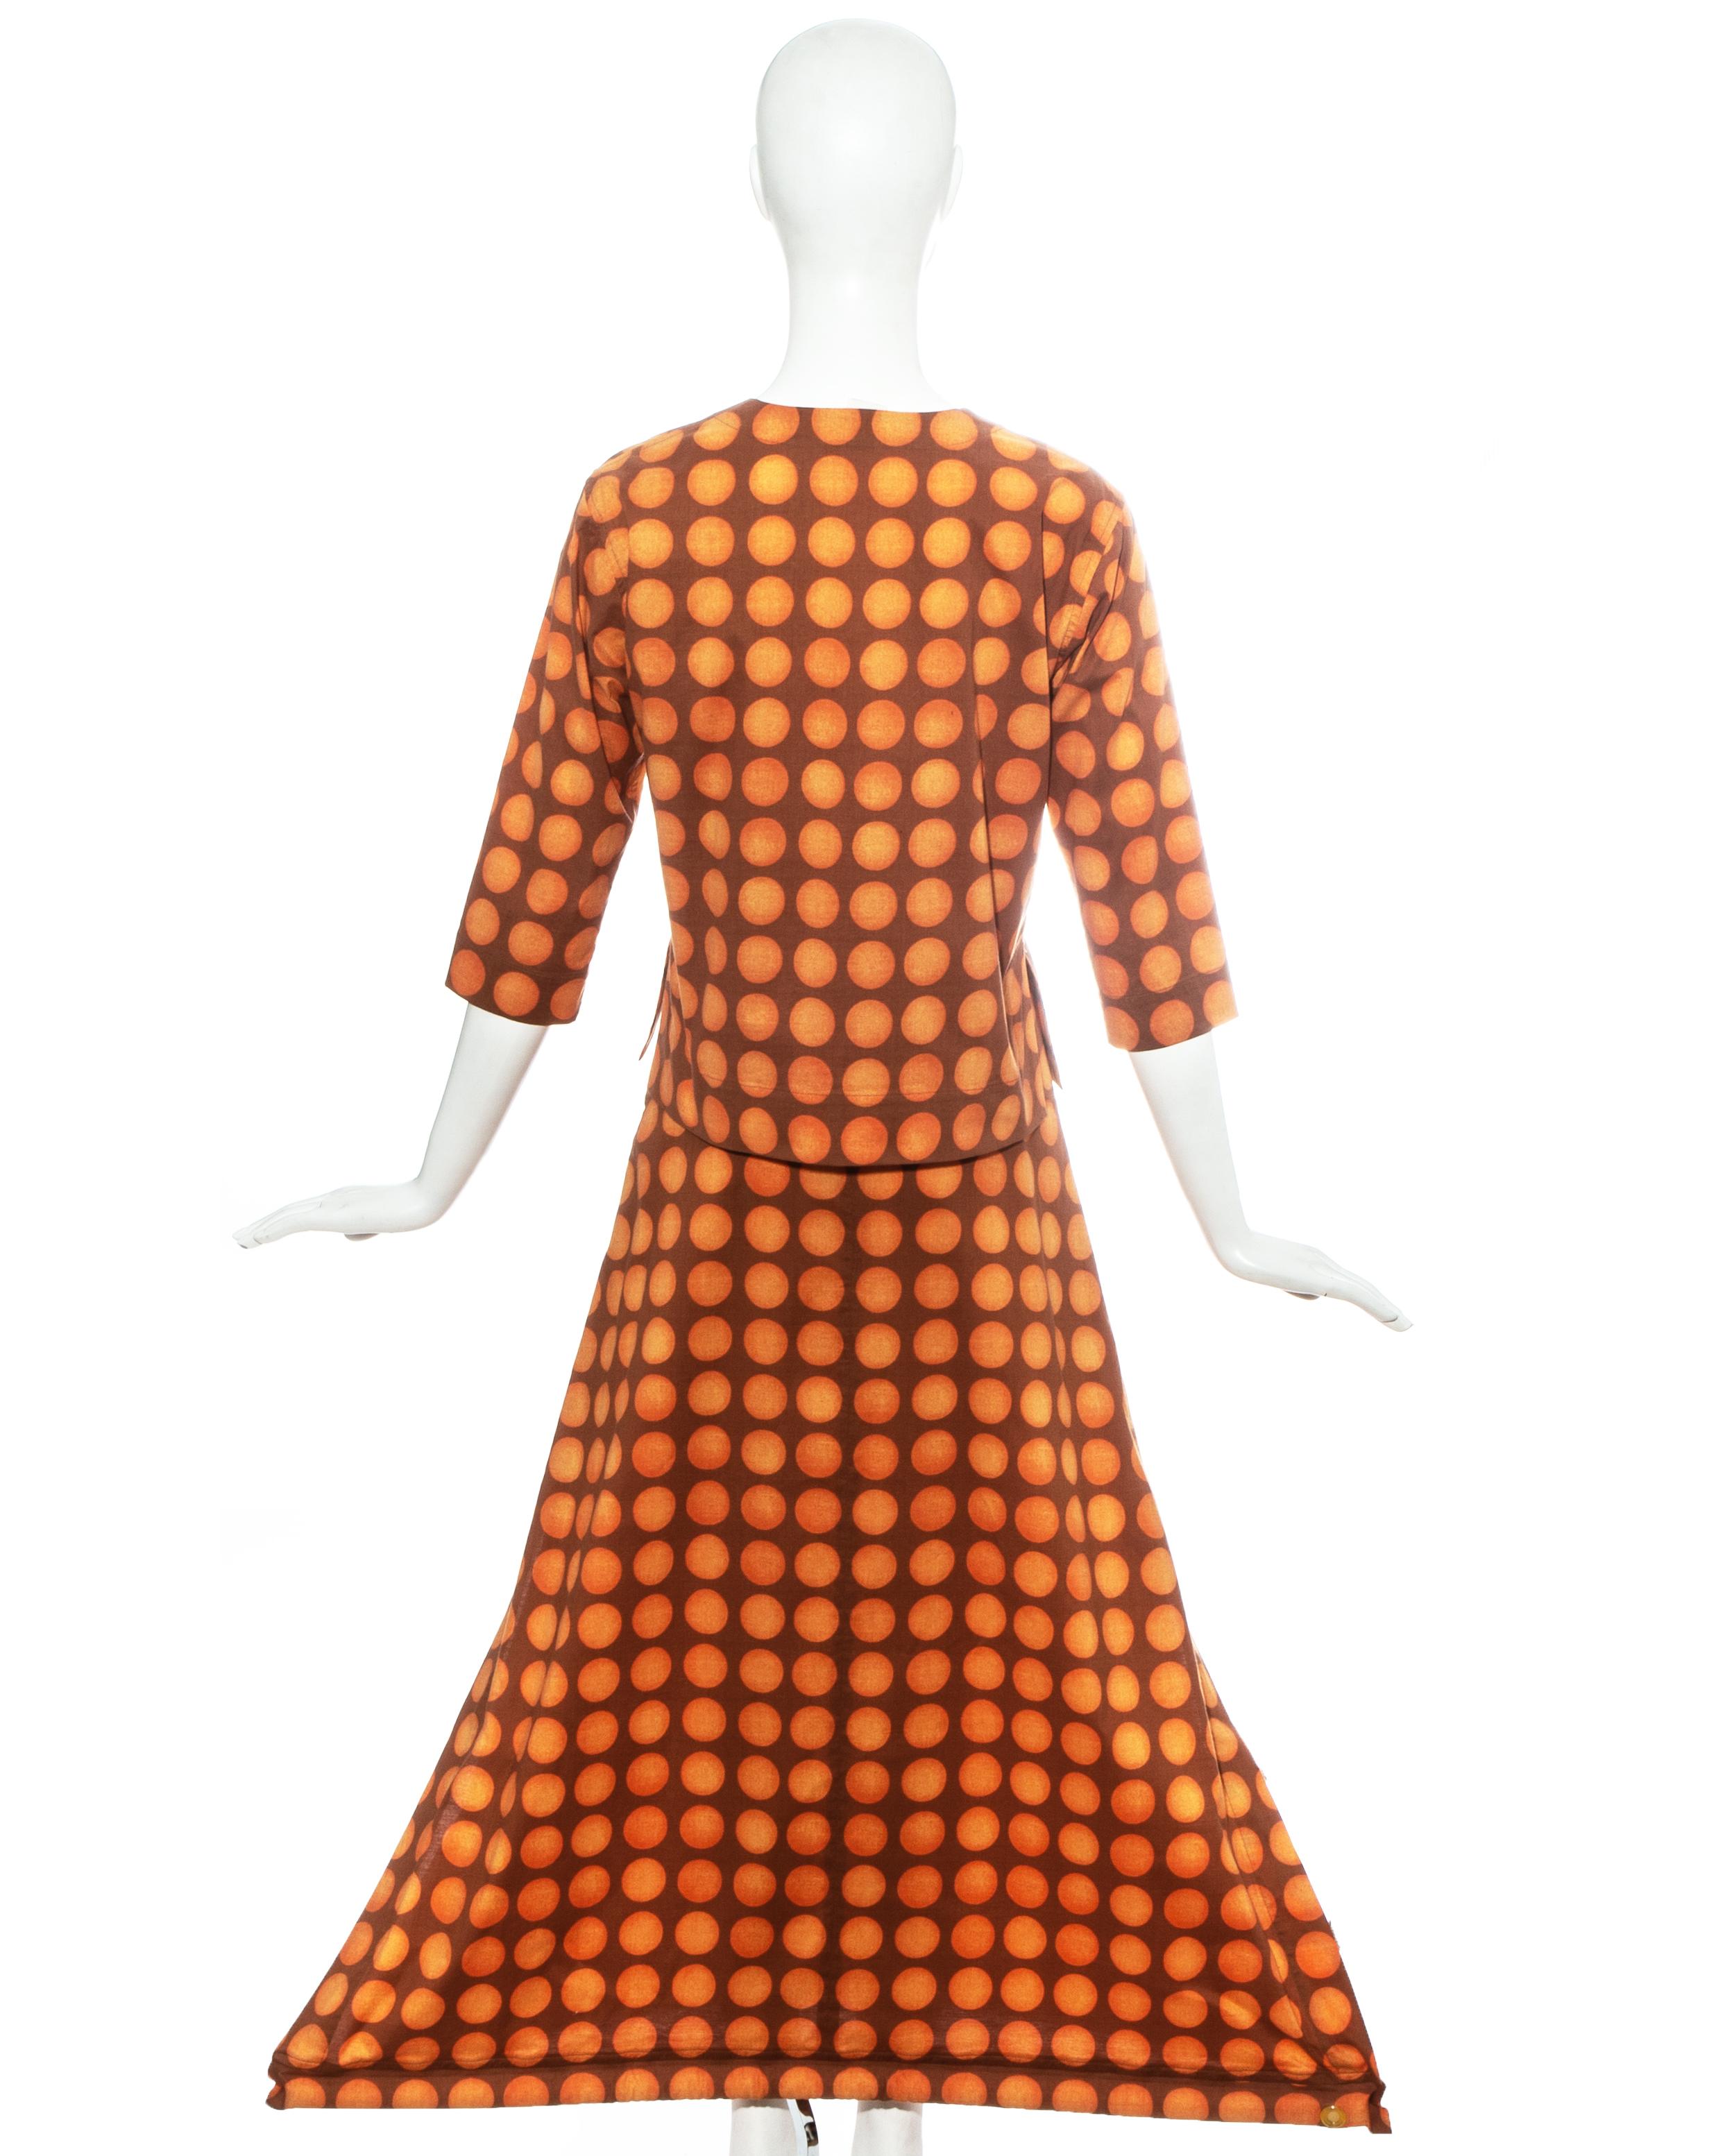 Issey Miyake orange polkadot printed cotton skirt suit, ss 2001 For Sale 1